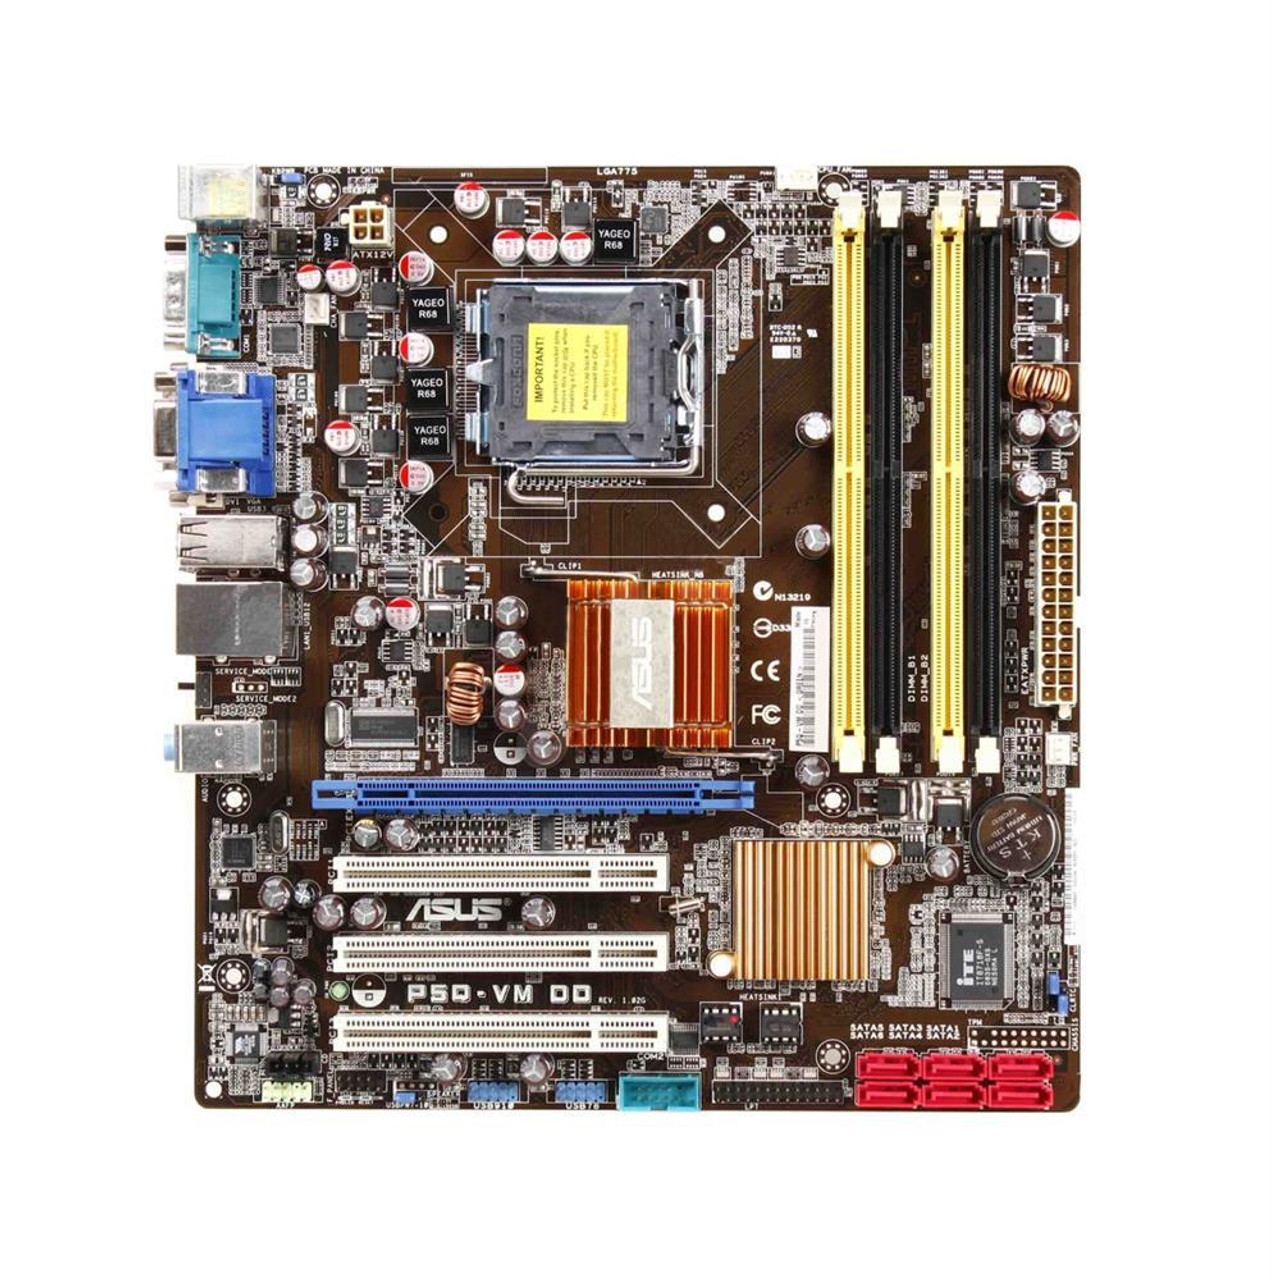 90-MIB9P0-G0EAY00Z ASUS P5Q-VM DO / Intel Q45 / Socket 775 ATX Mainboard (Refurbished)